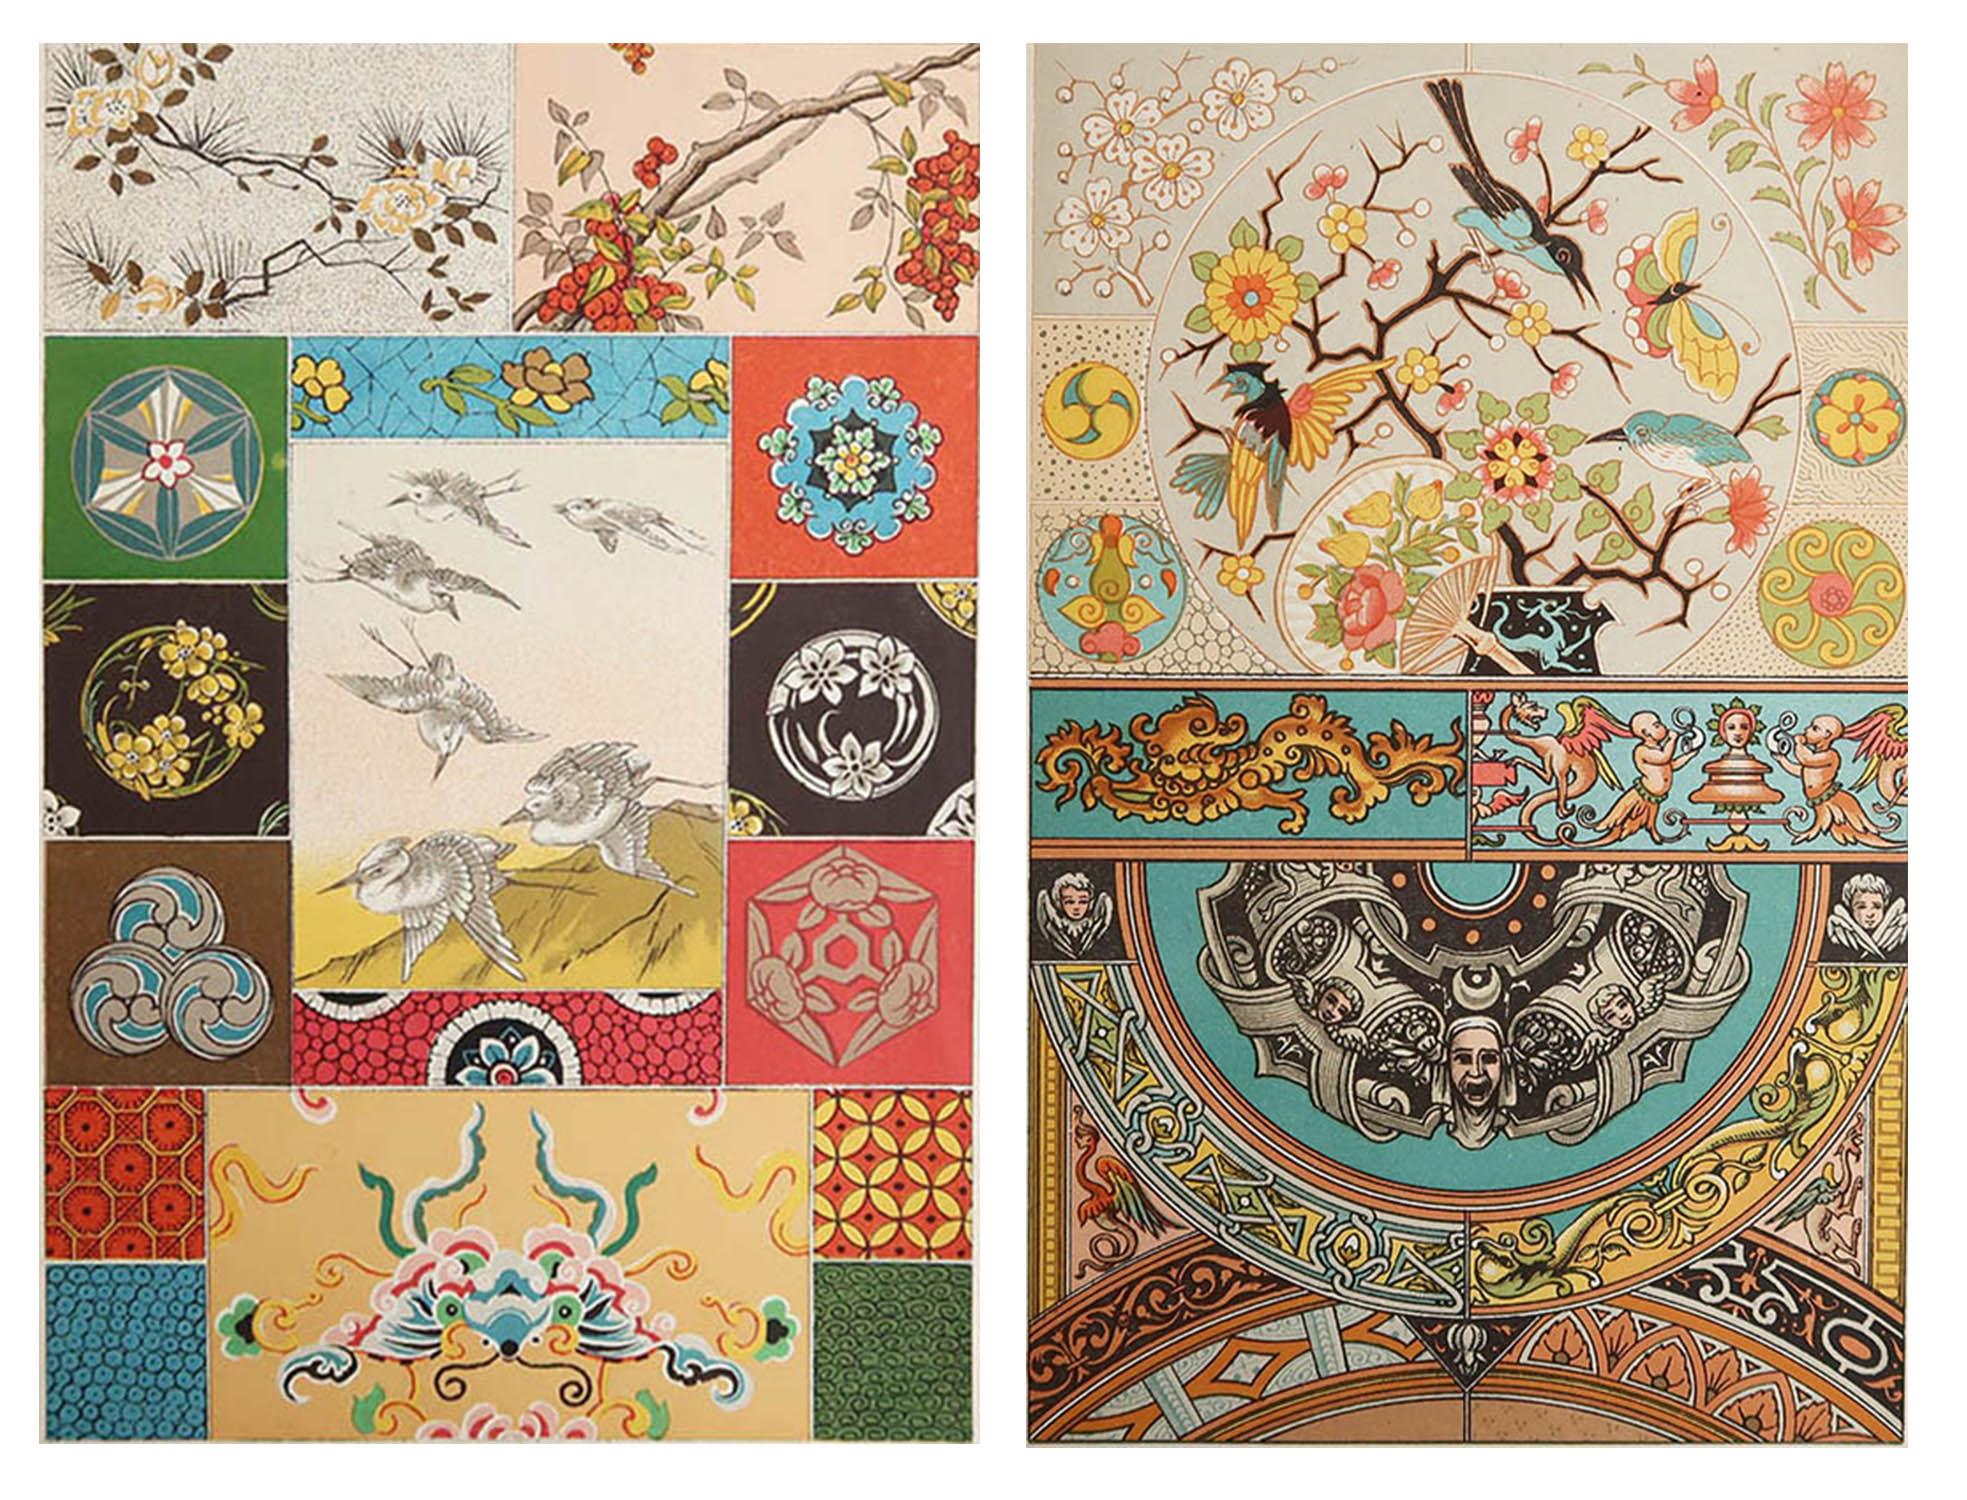 Wonderful prints of Decorative Art, mainly Japonisme

Chromo-lithographs

Published by W.Mackenzie. C.1880

Original colour

Unframed.

Free shipping.








